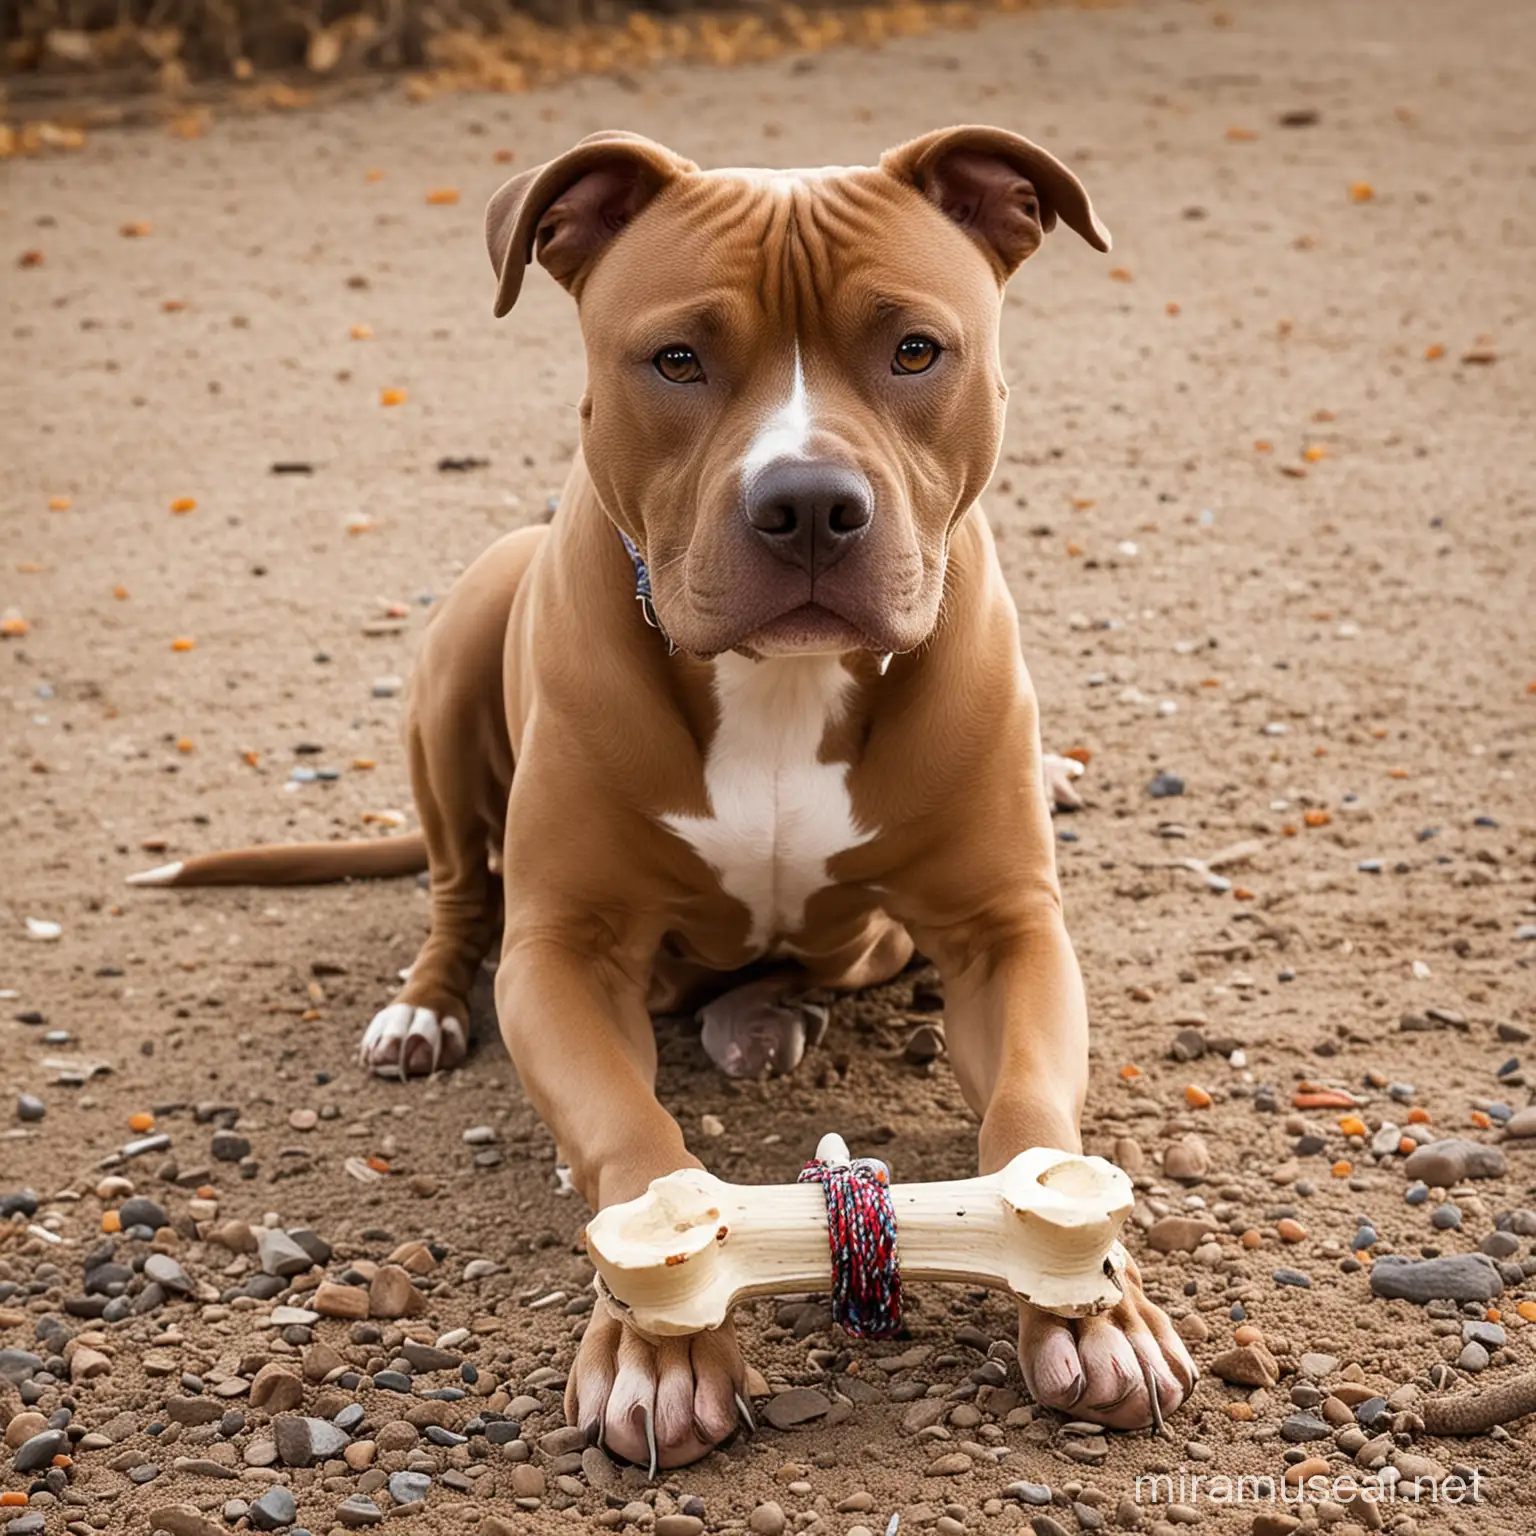 A pitbull with a toy bone.